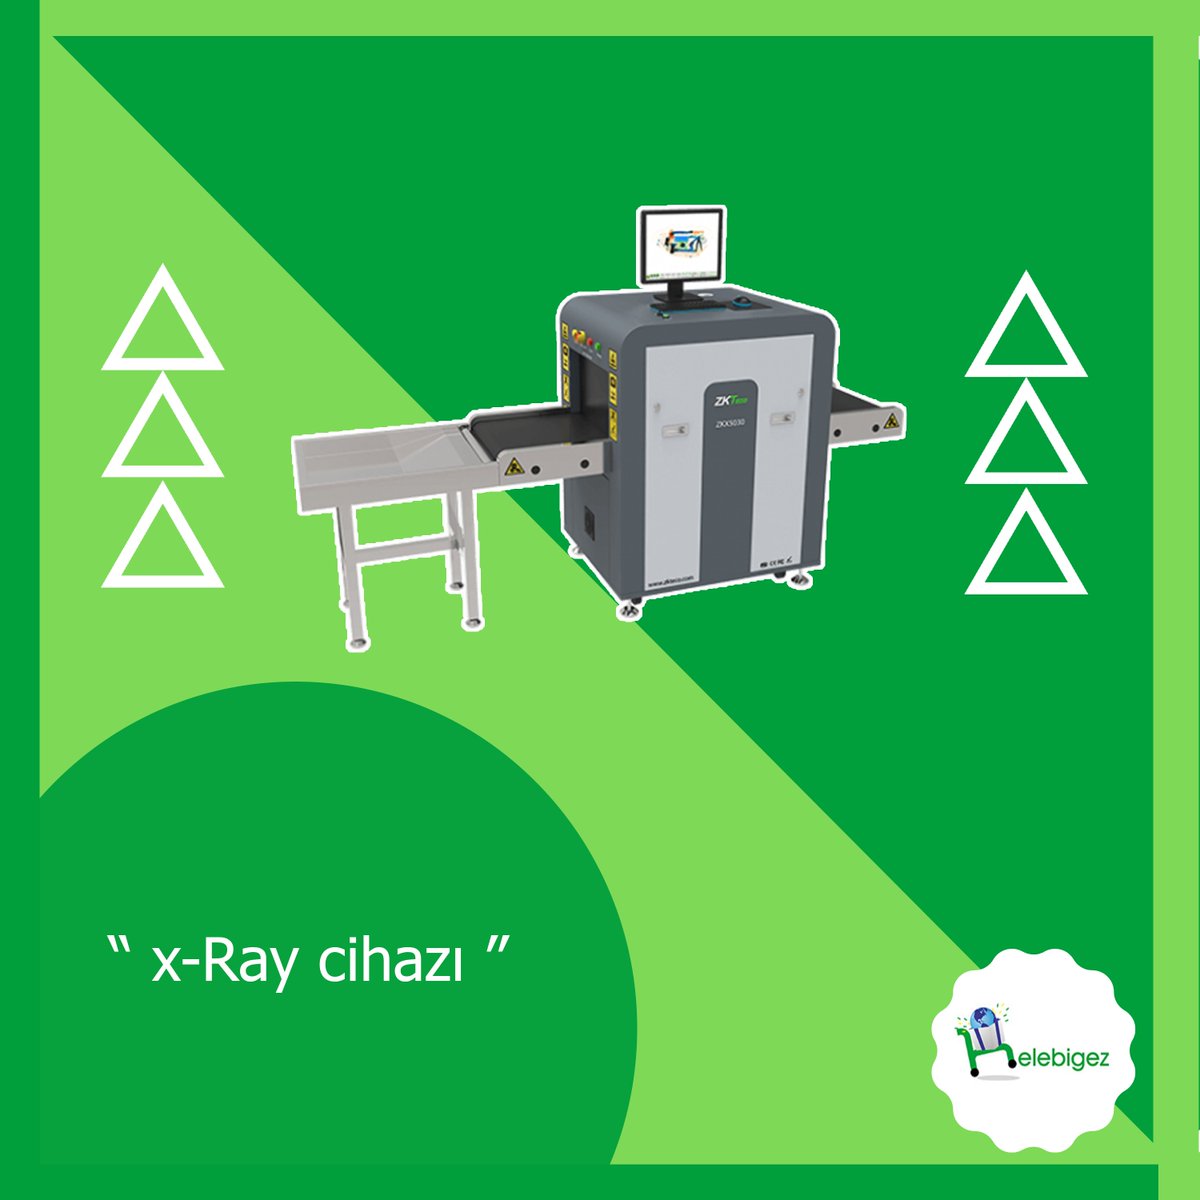 X-Ray cihazı ile üst seviyede güvenlik...
🌎 helebigez.com
📞 0232 431 18 17
📩 helebigez@gmail.com
#xraycihazi #xraydedektör #xray #kapıdedektörü #kapitipimetaldedektor #kapıdedektörleri #security #avm #xraydedektör #metaldedektör #metalarama #helebigez